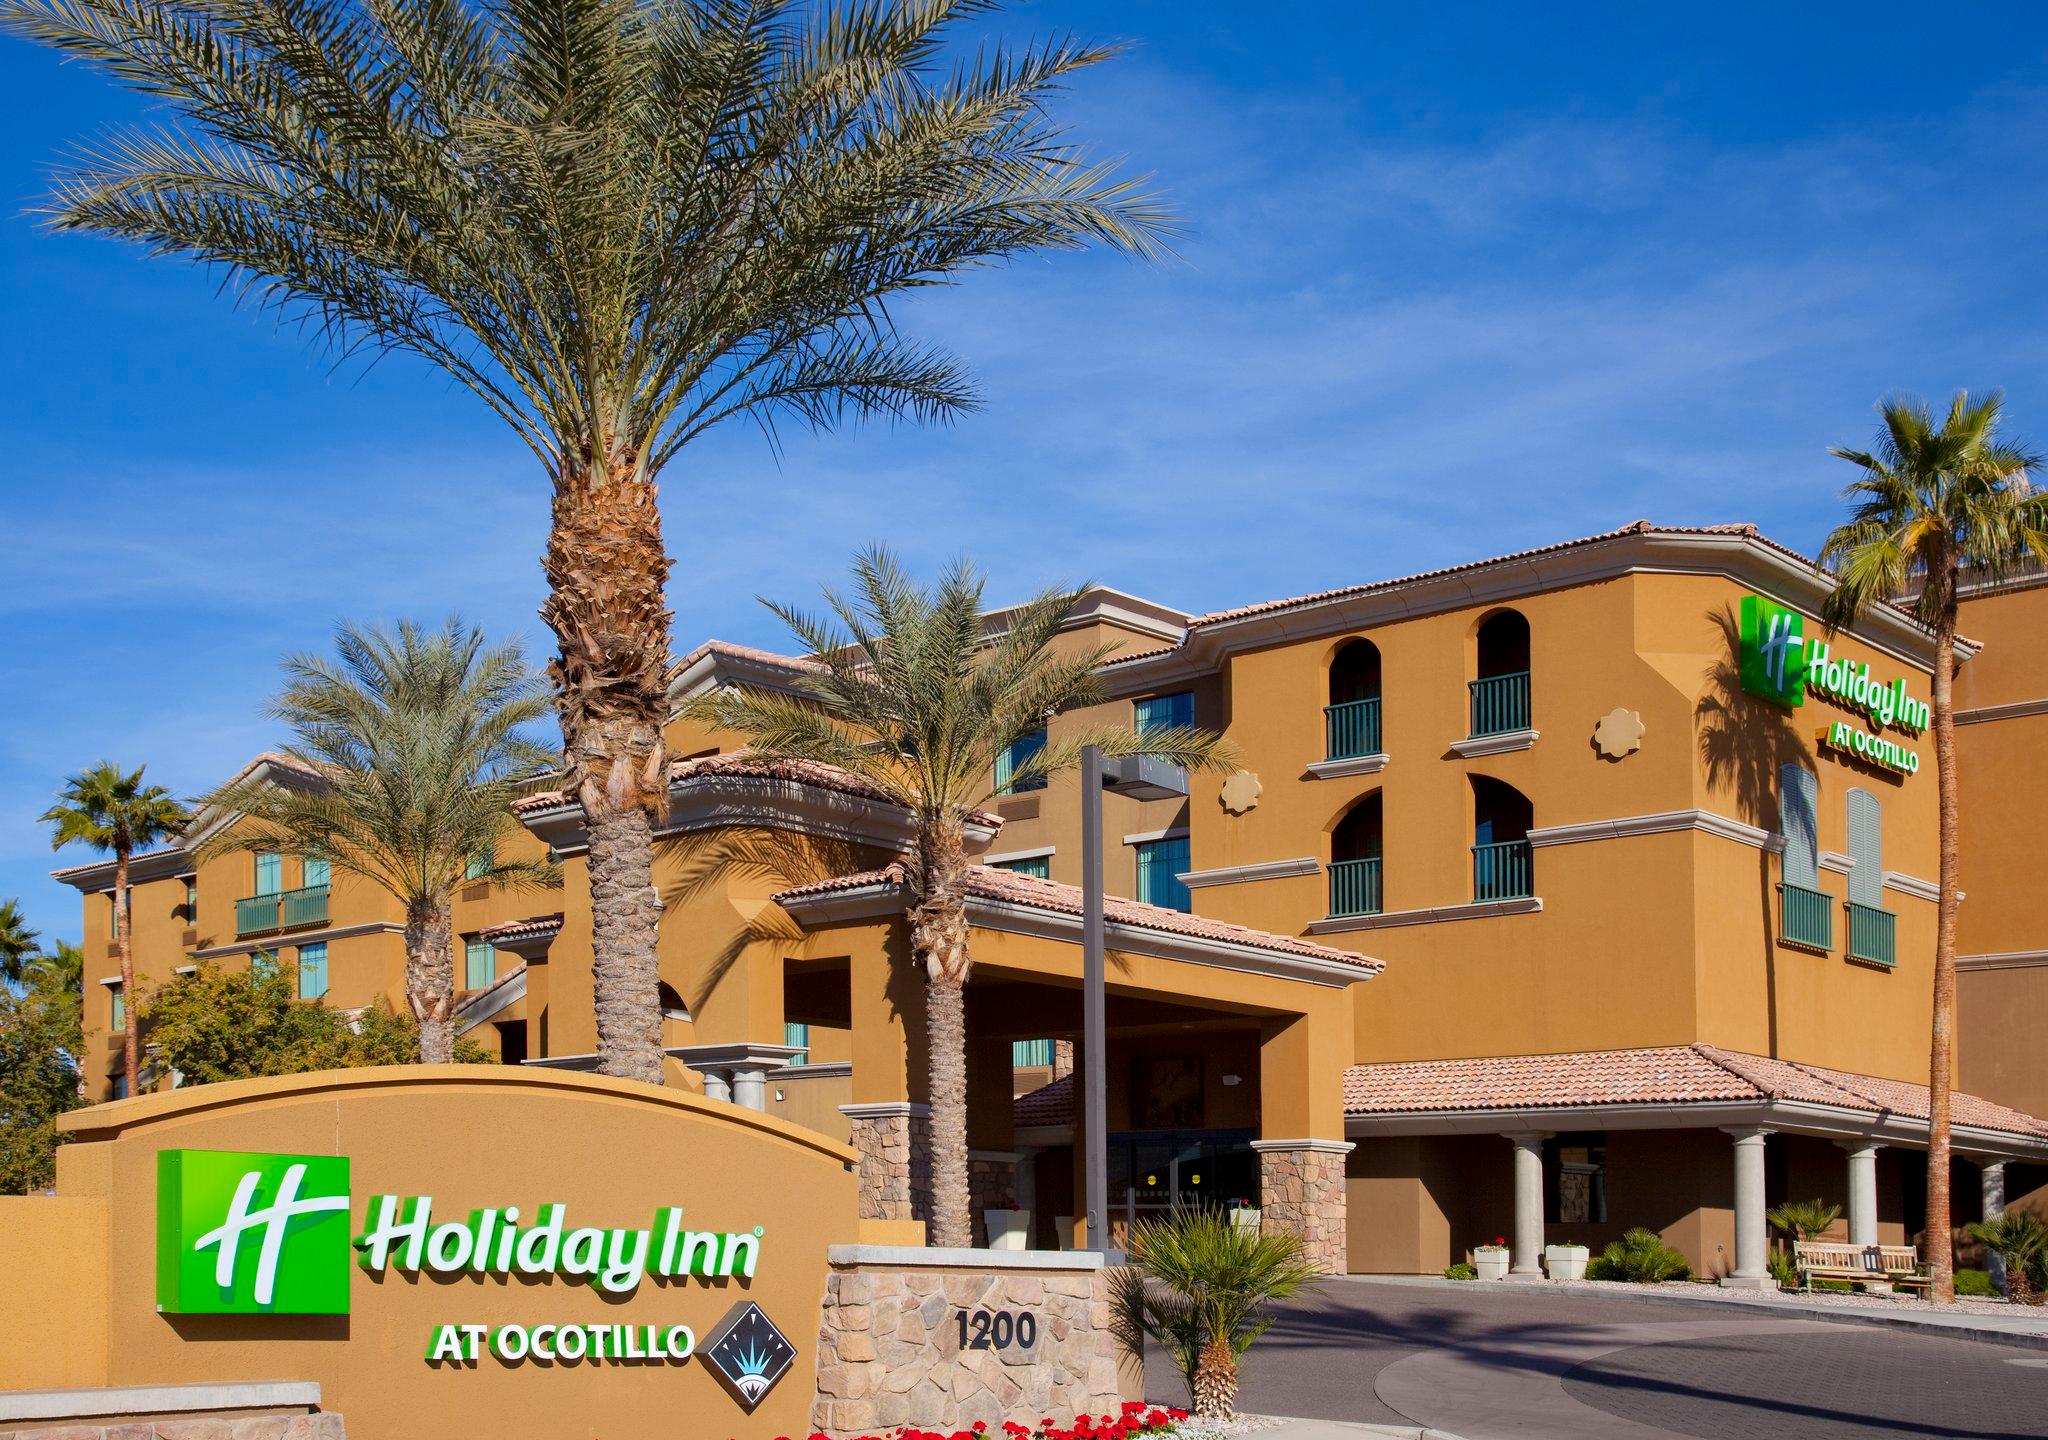 Holiday Inn Phoenix - Chandler in Chandler, AZ